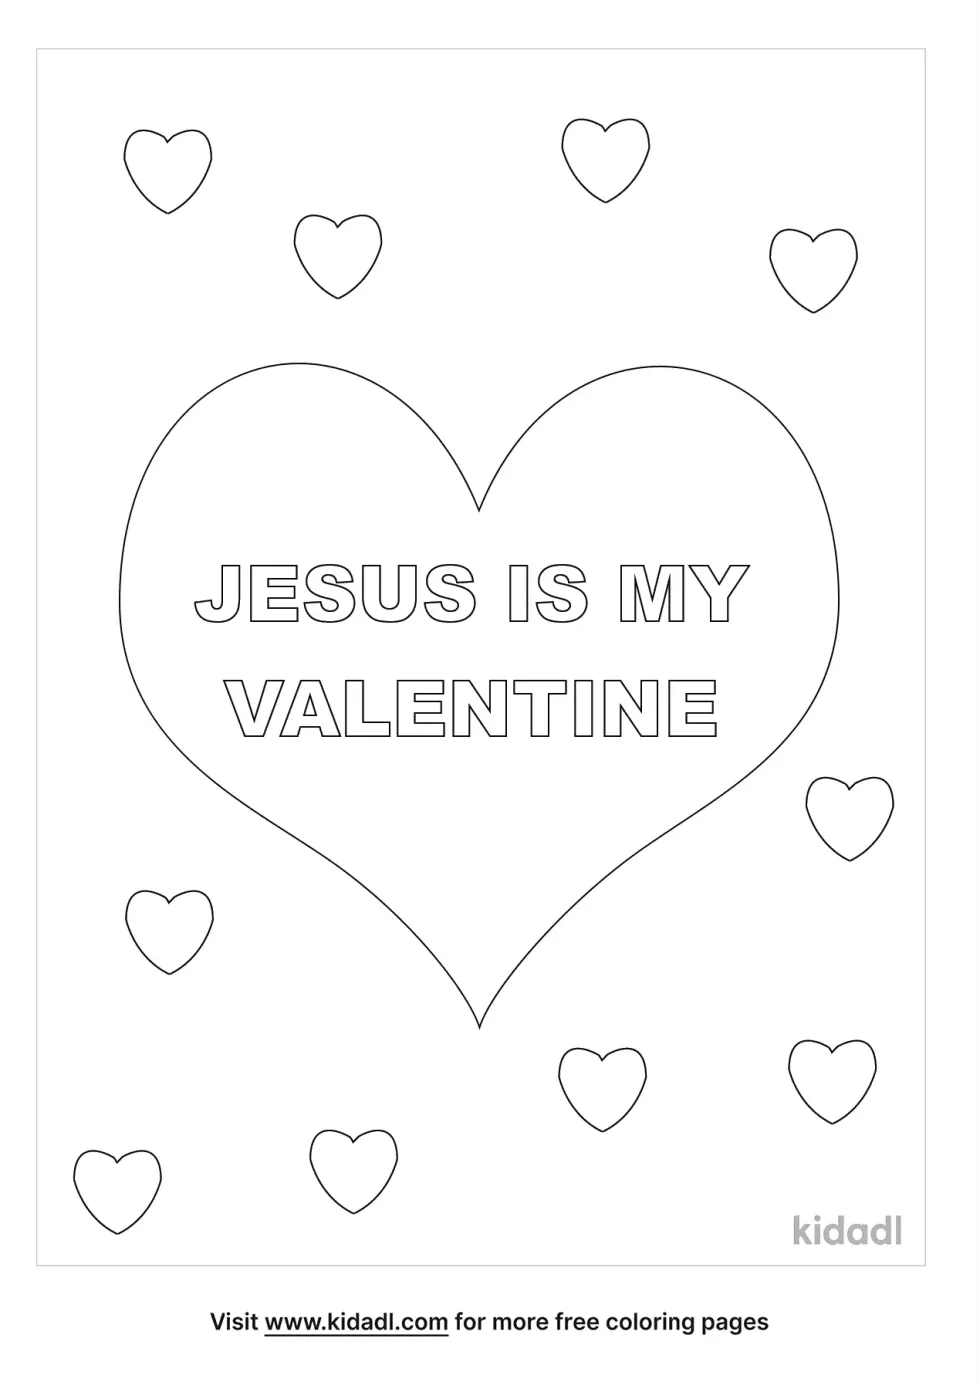 Jesus Is My Valentine